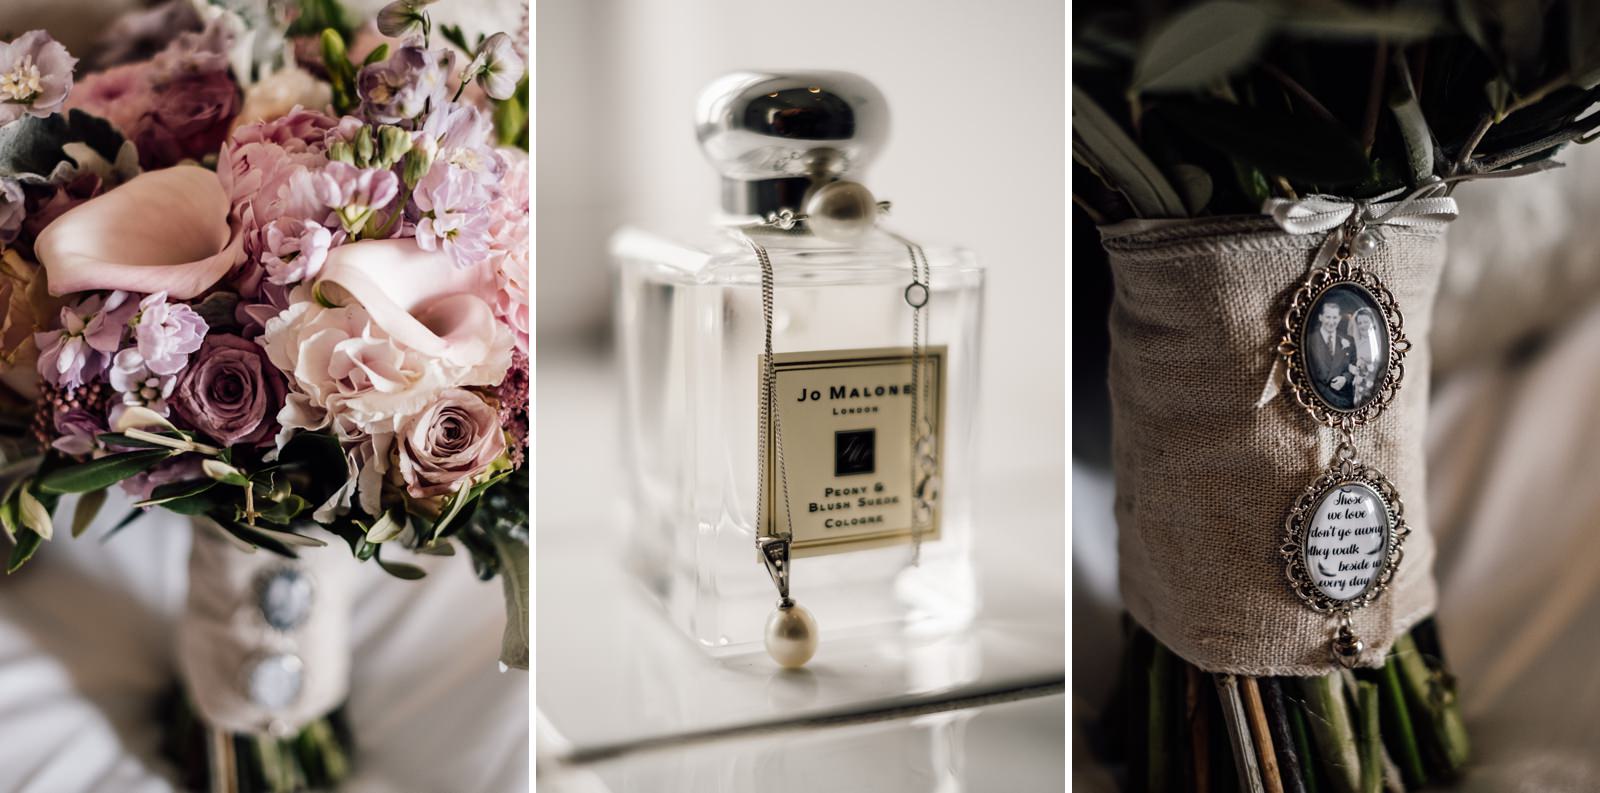 Wedding flowers and Jo Malone perfume